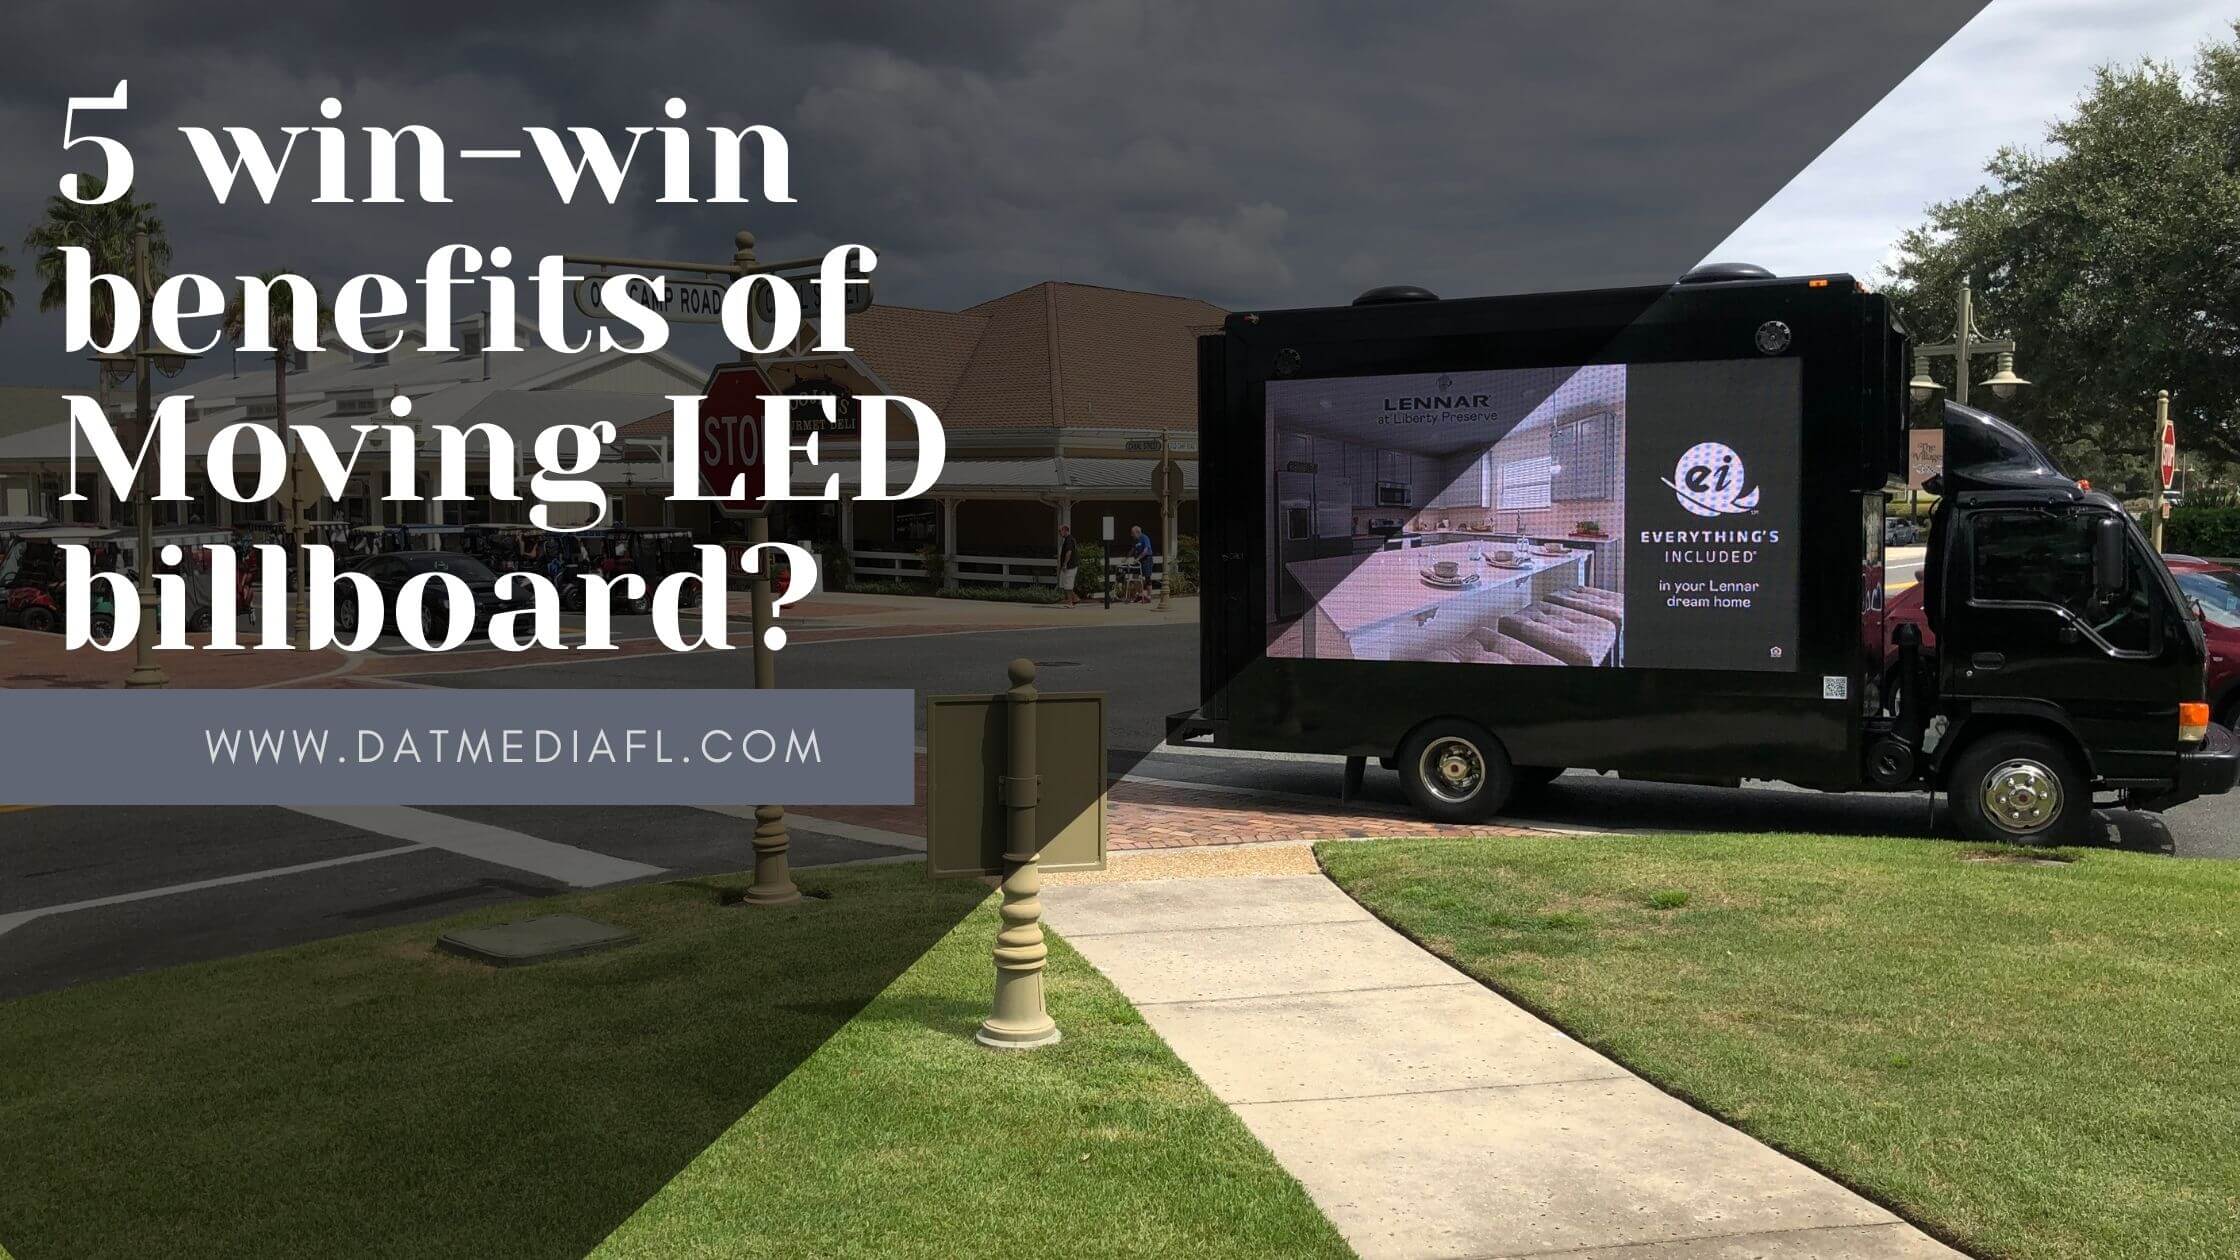 5 win-win benefits of Moving LED billboard?